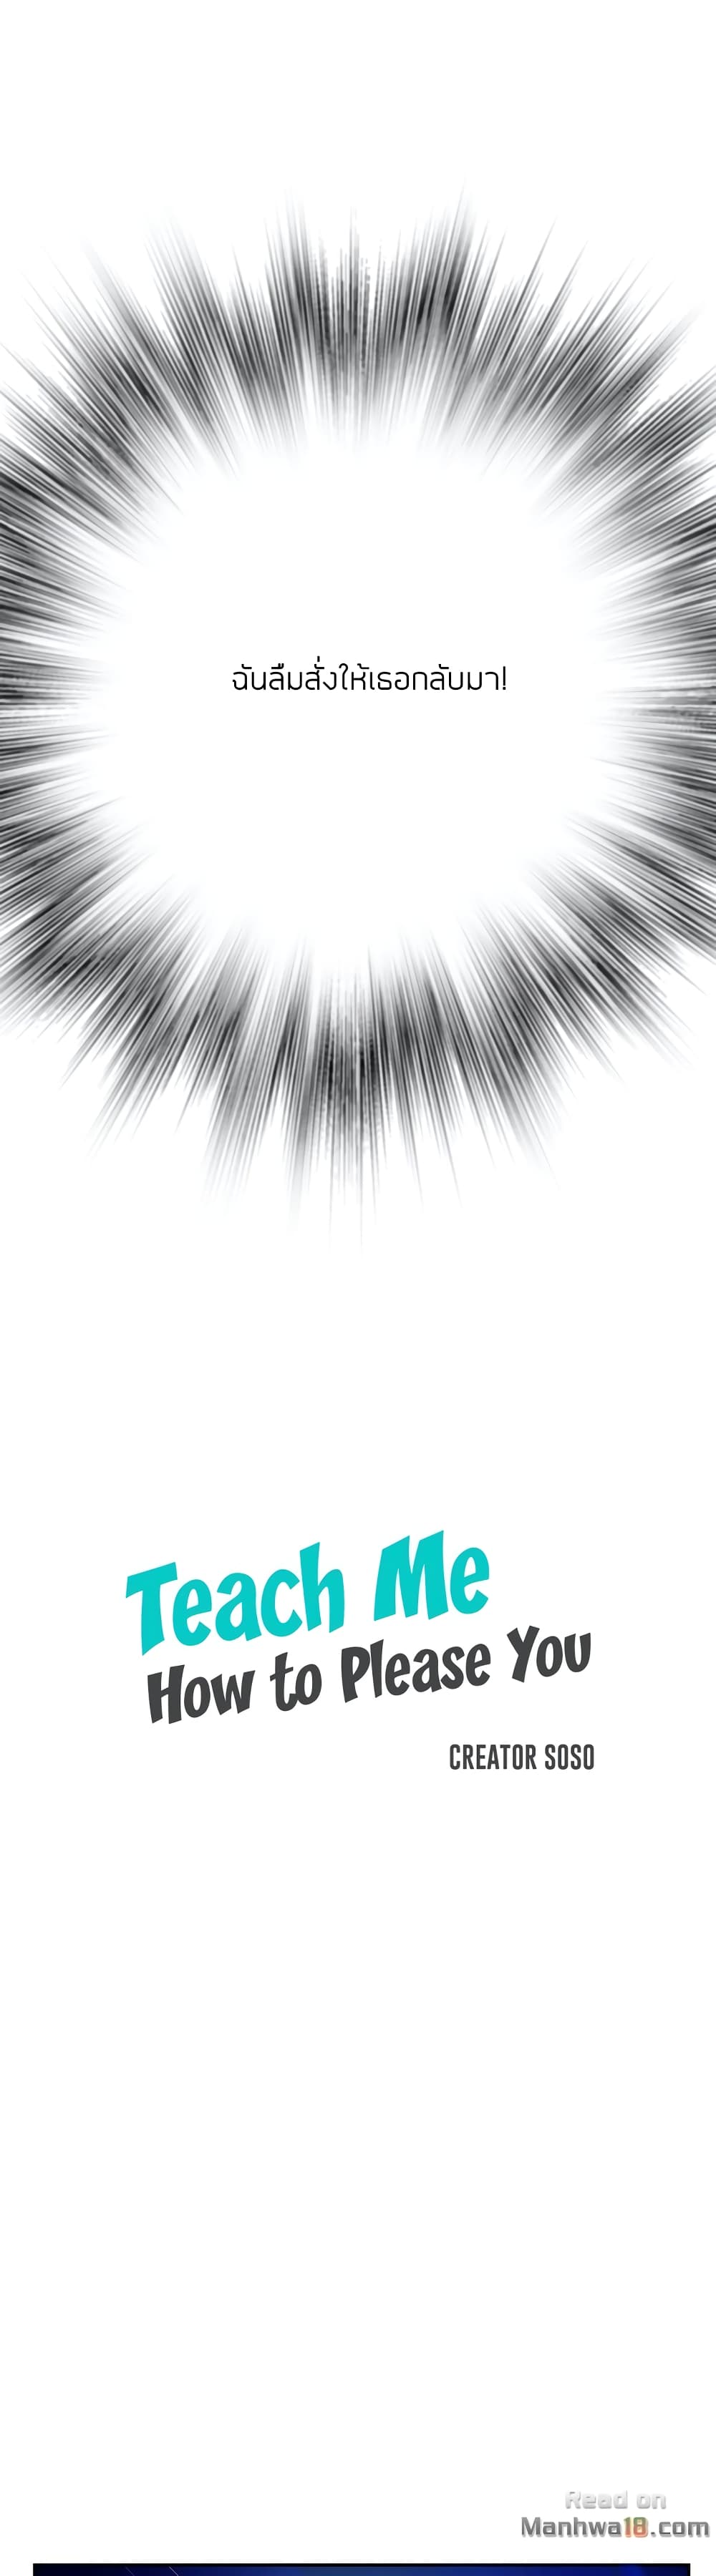 Teach Me How to Please You 7 (3)